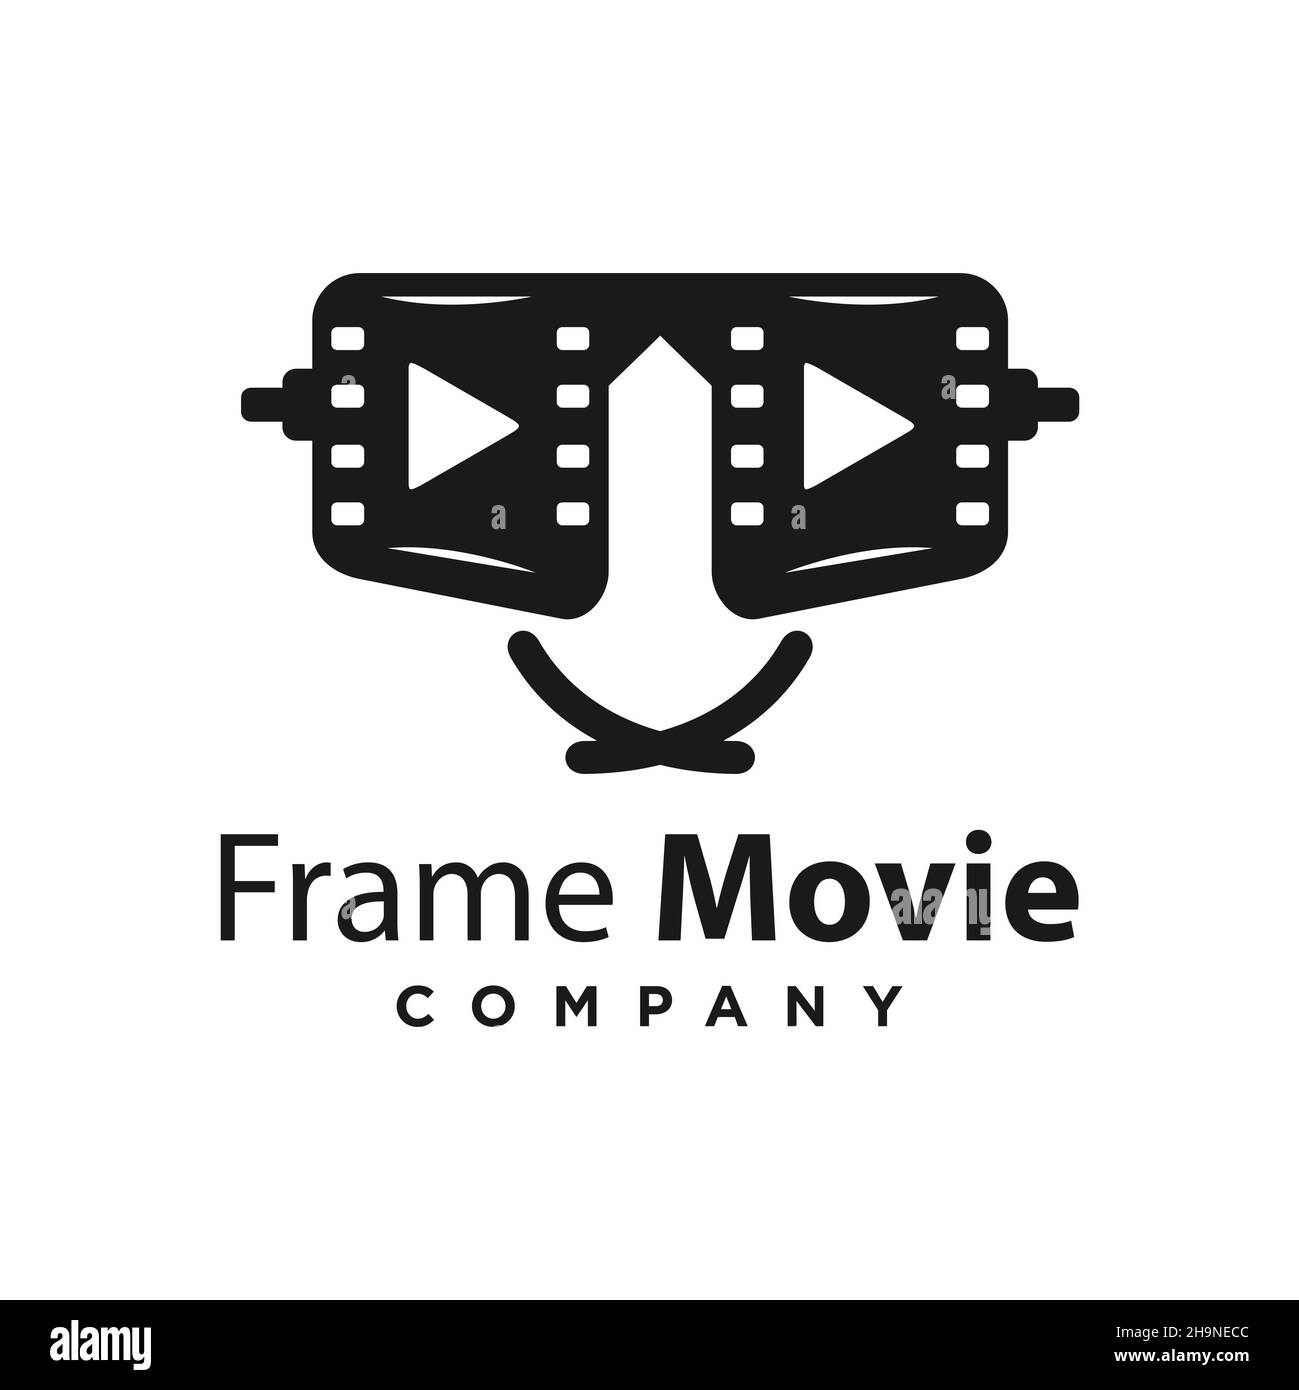 glasses movie logo design template Stock Photo